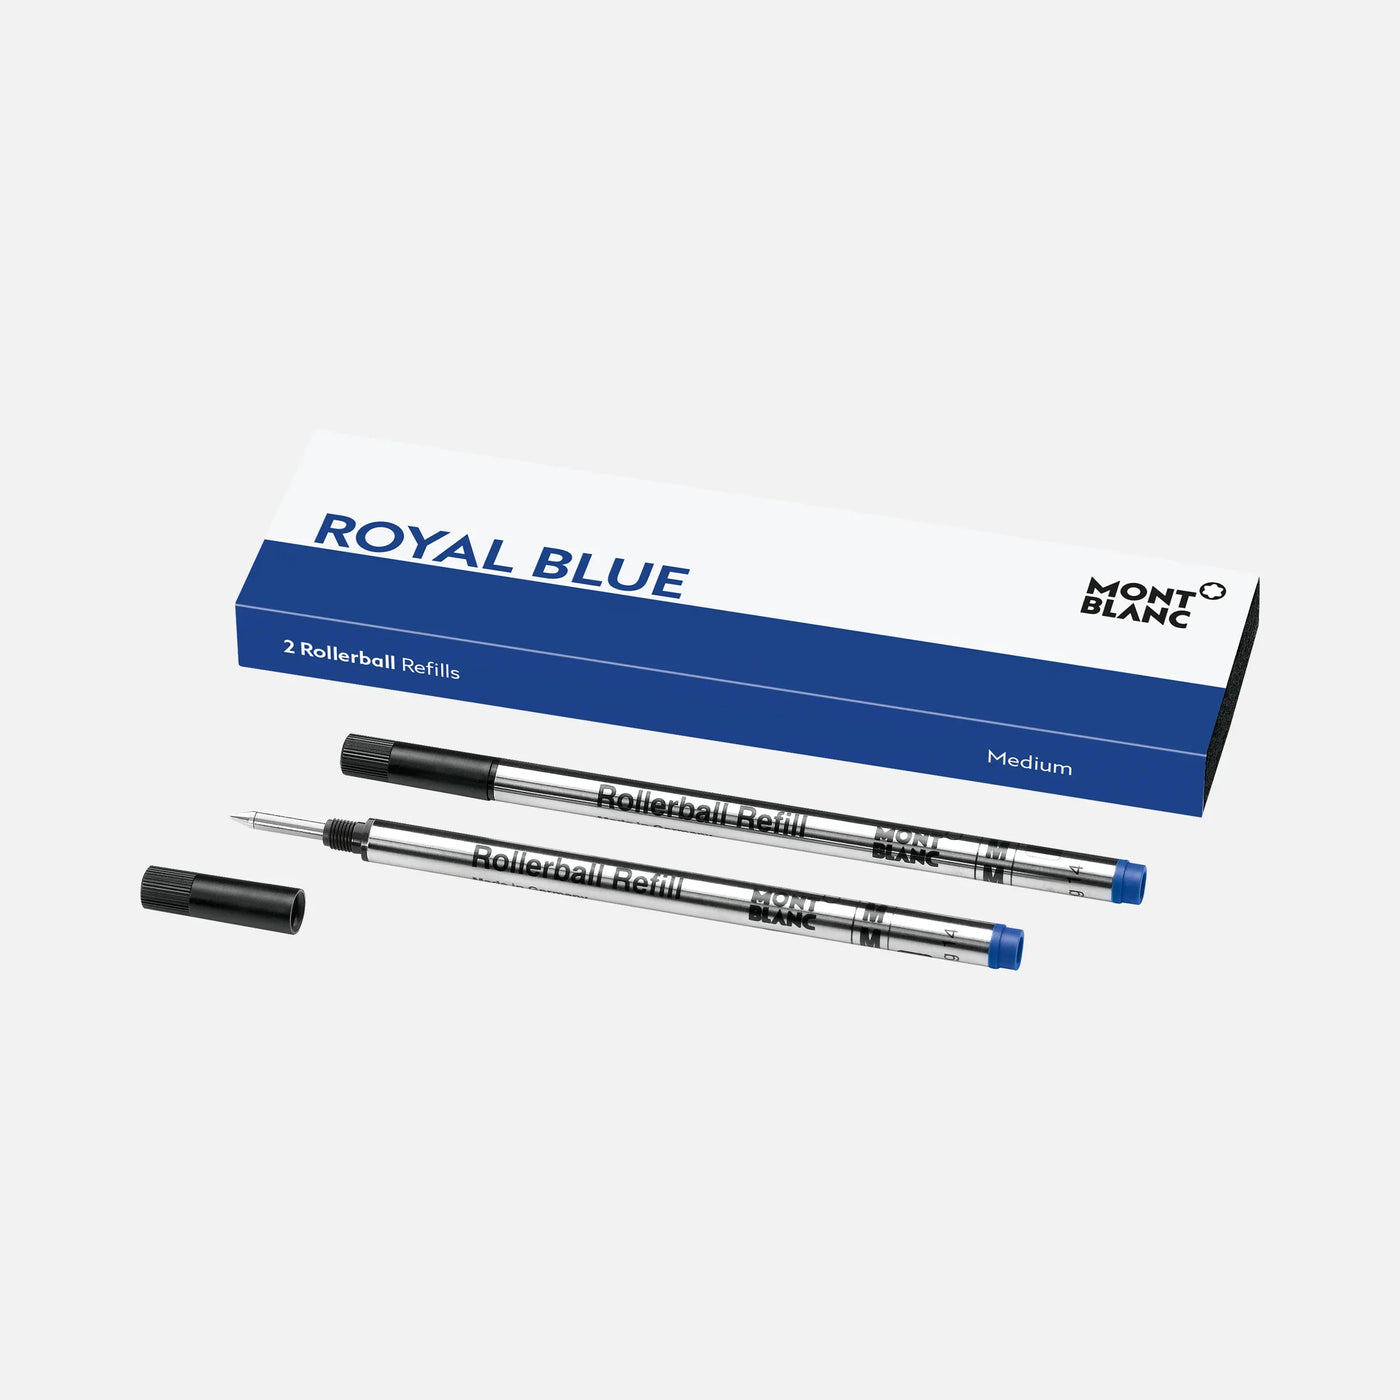 Montblanc Royal Blue 2 Rollerball Refills - Medium